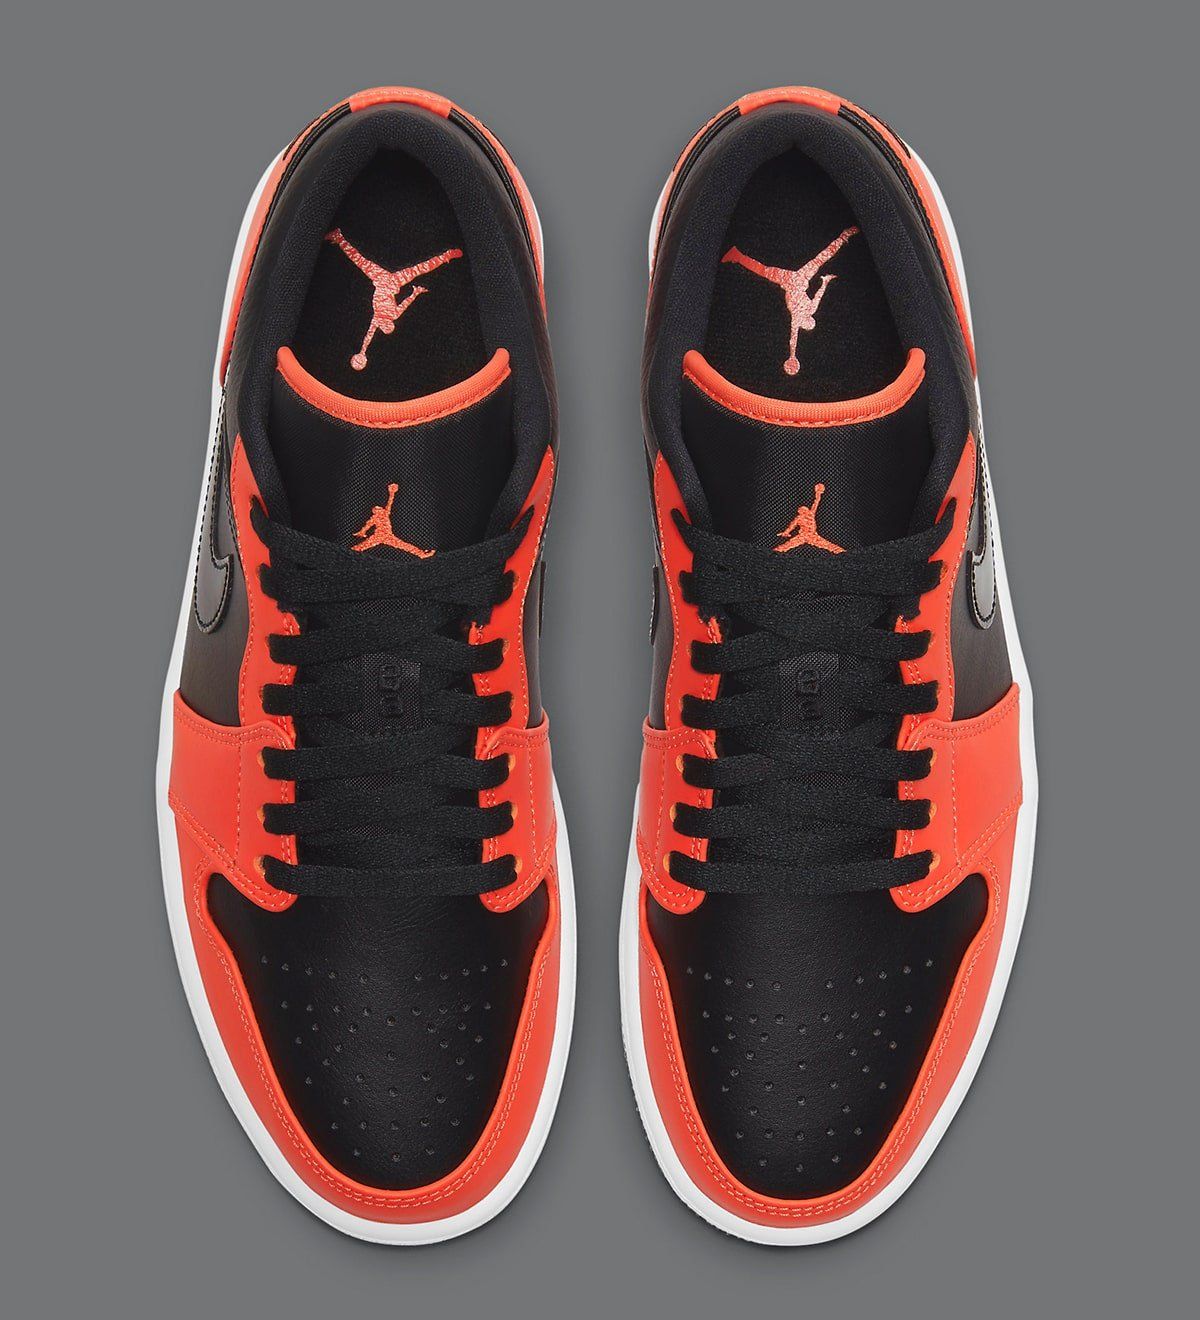 Air Jordan 1 Low Appears in Black & Orange | LaptrinhX / News